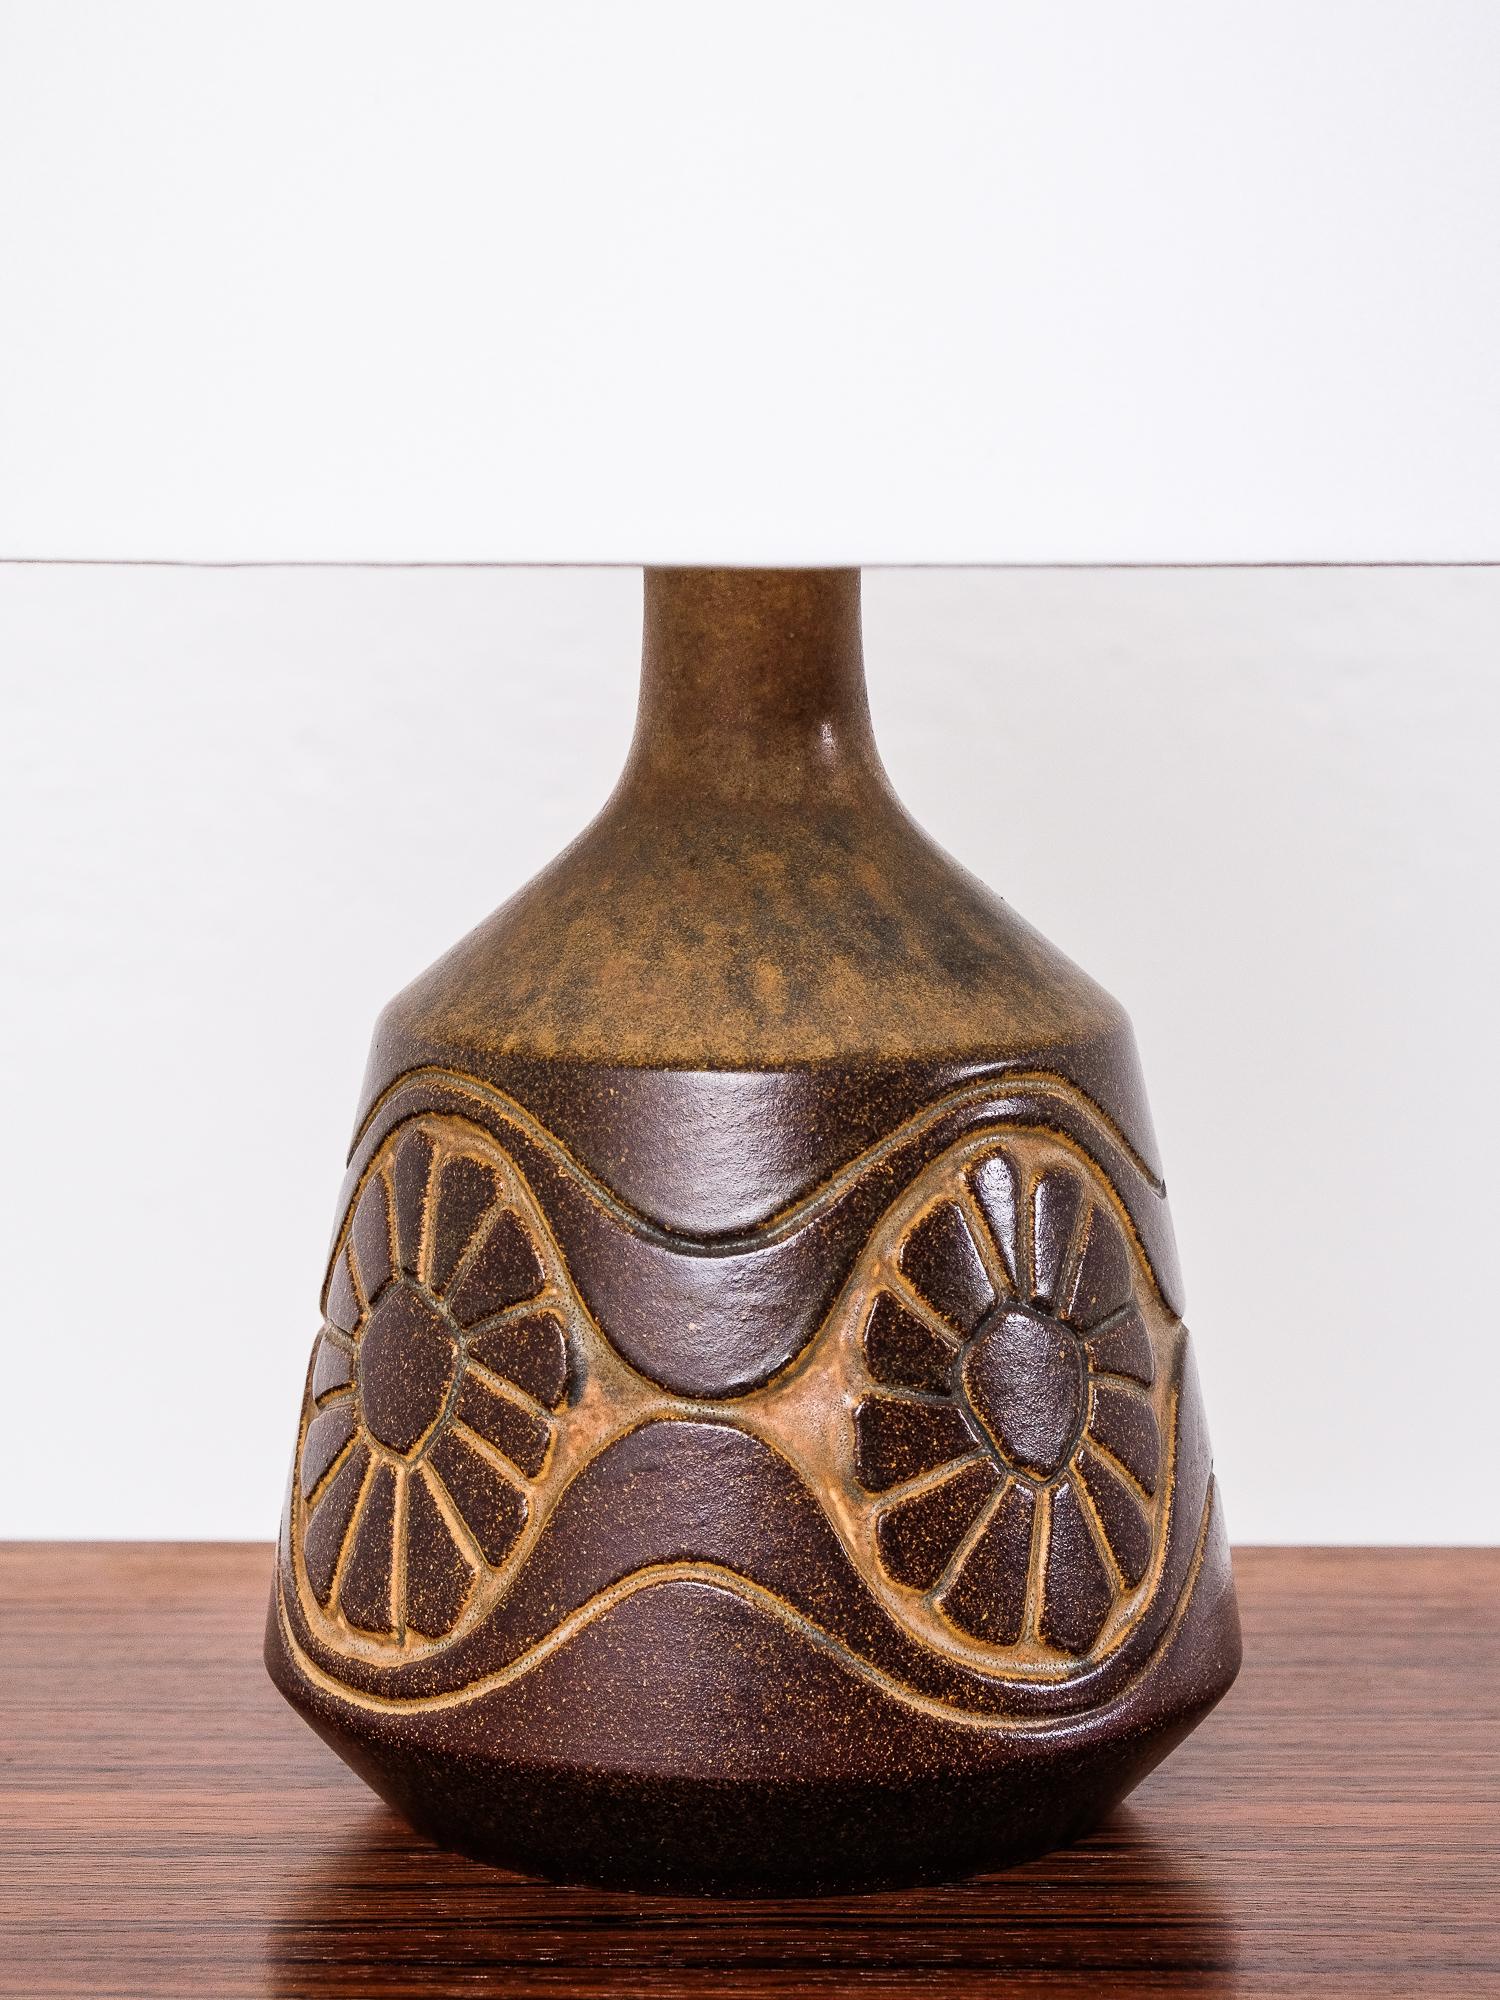 Ceramic table lamp from 1960s, Denmark.

Height with shade 45 cm. E27 bulb socket.